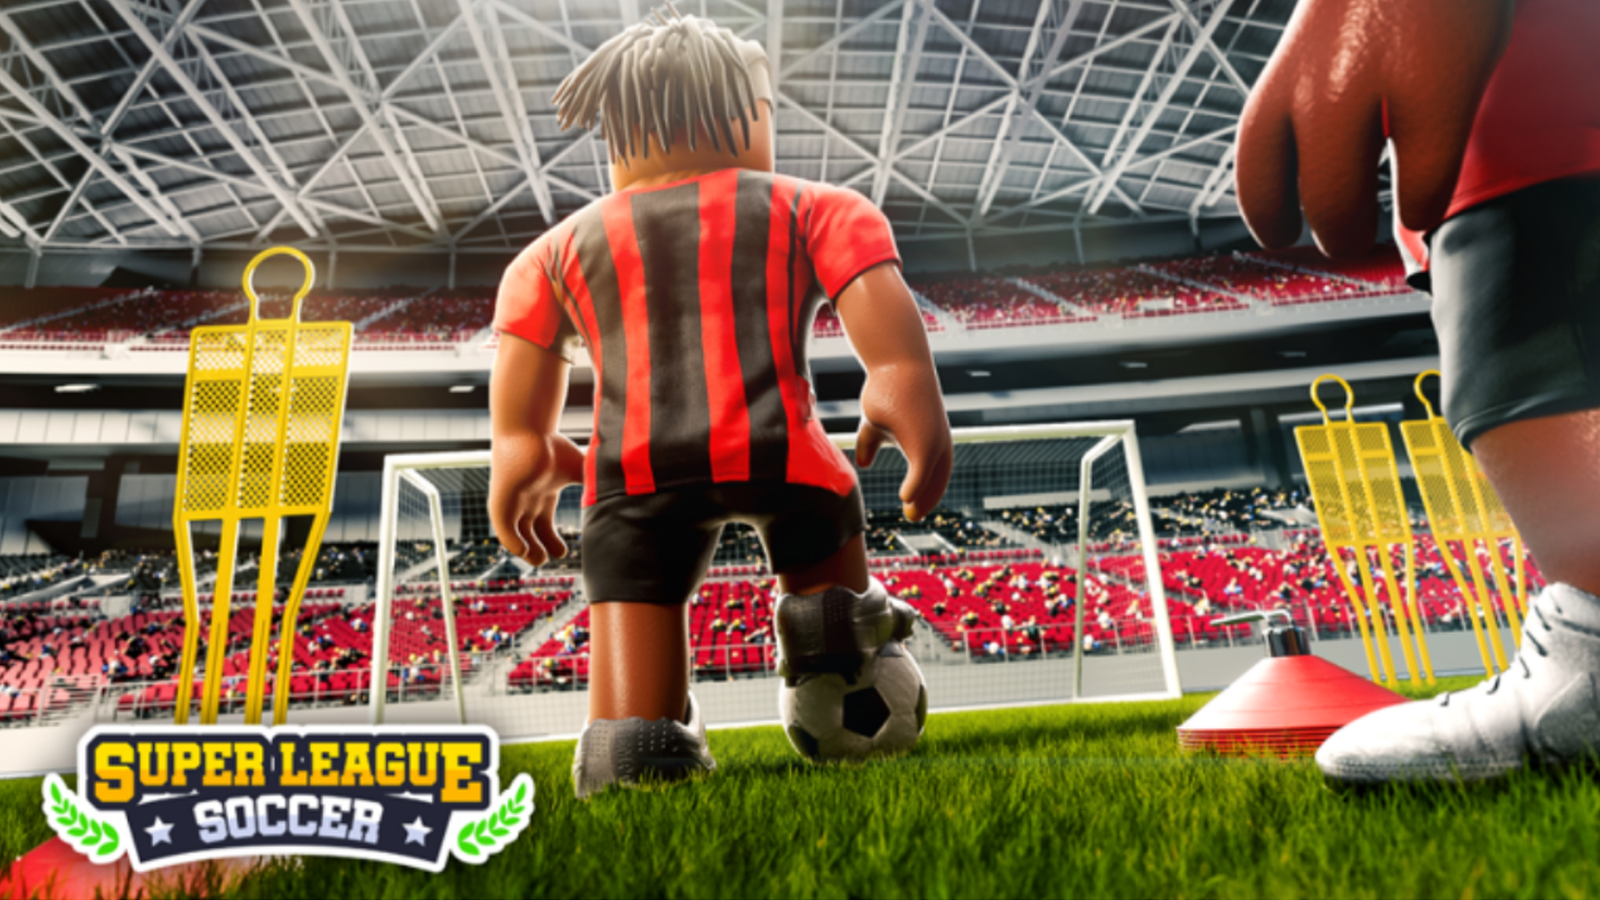 Head Soccer 2023 🔥 Play online